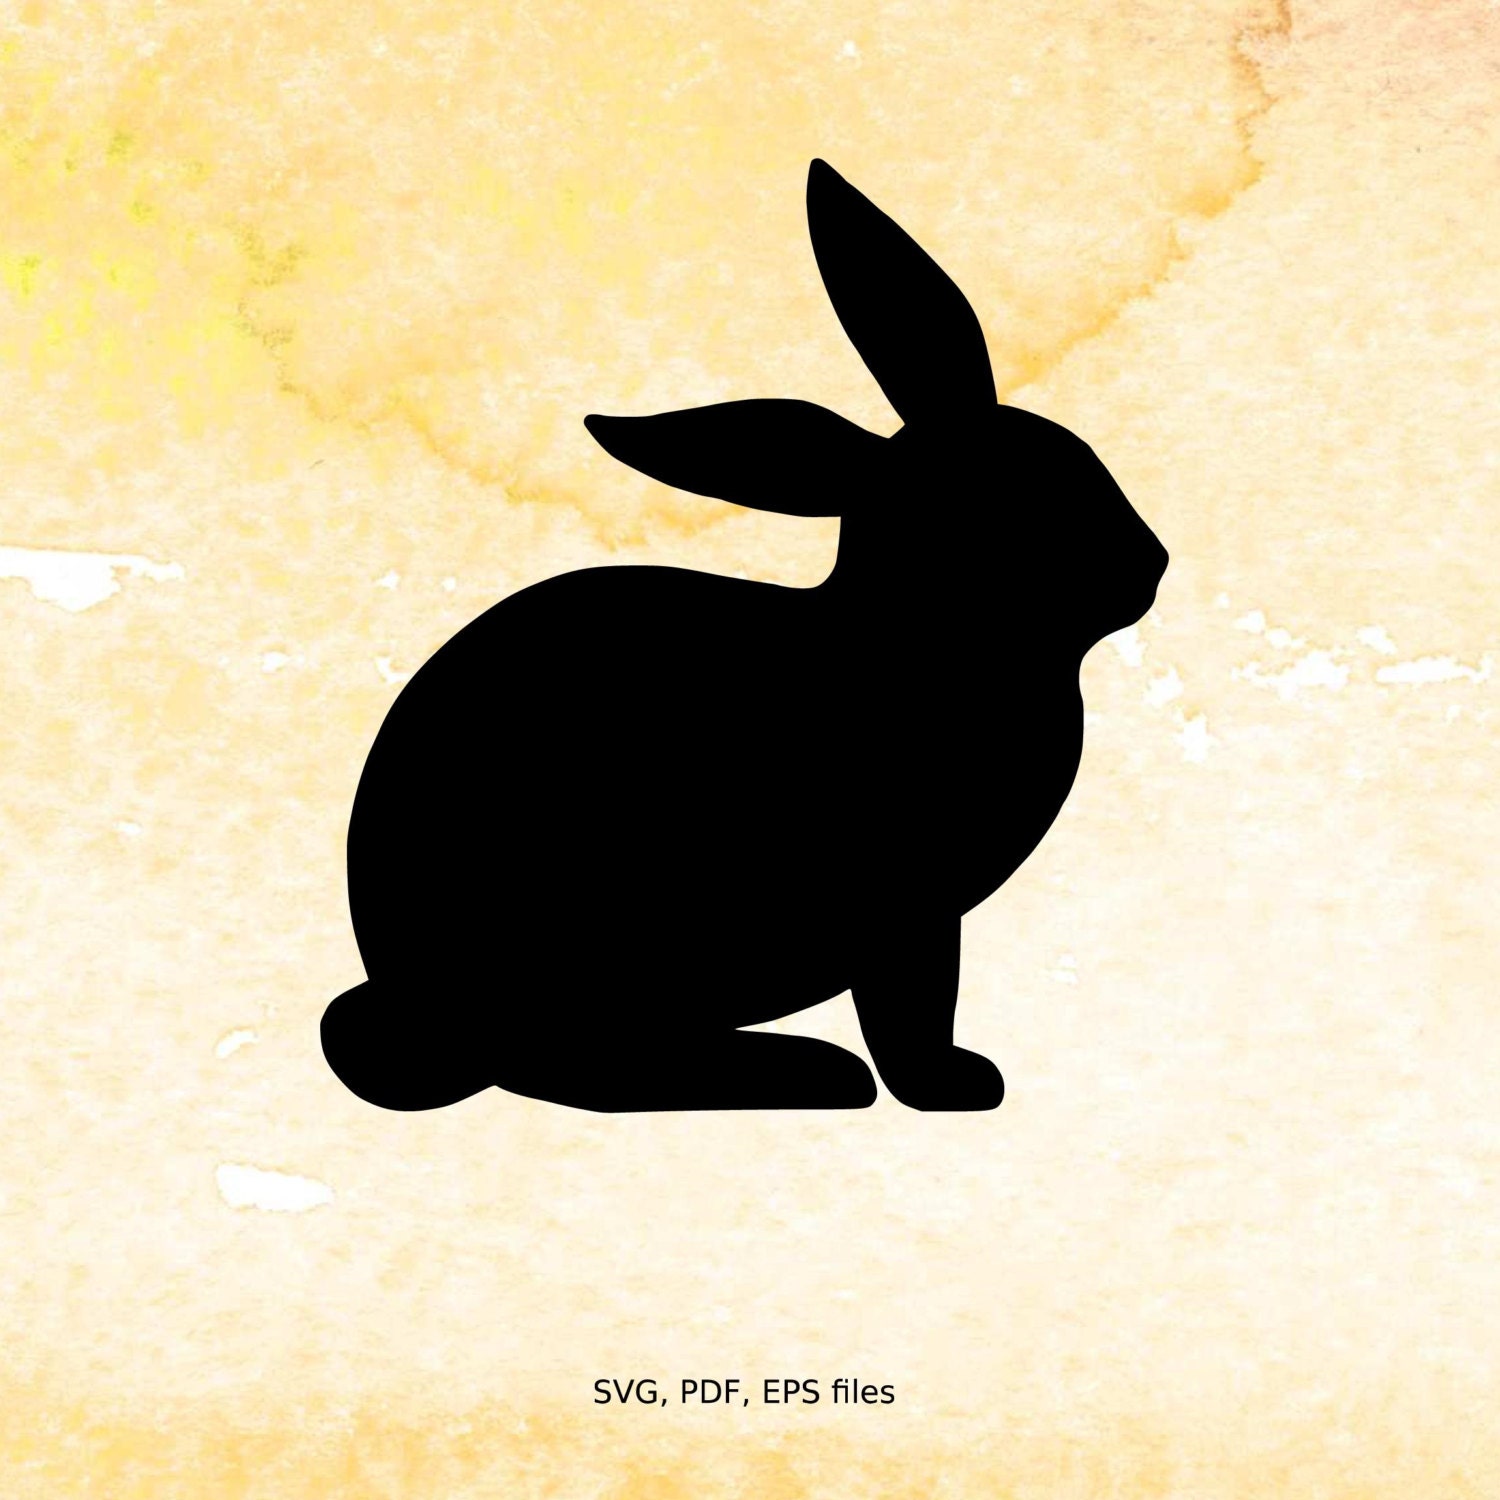 Bunny SVG cutting file Easter svg pdfeps files for